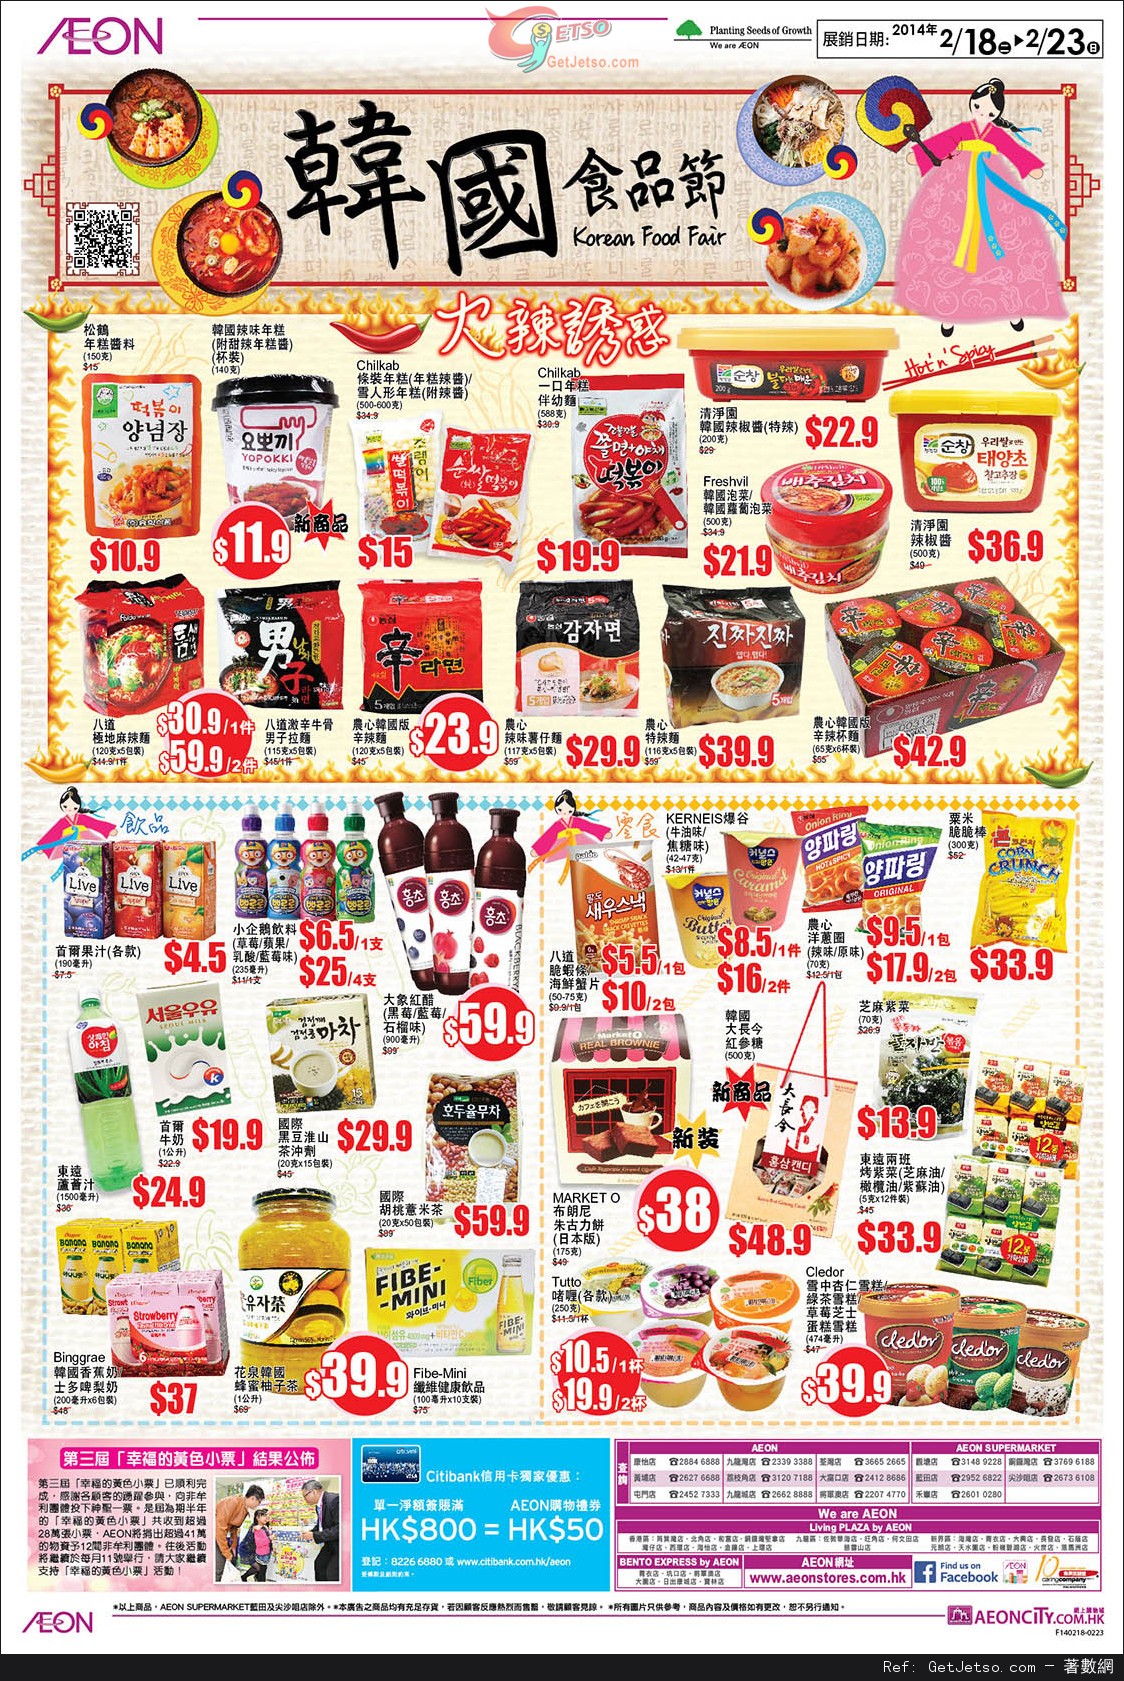 AEON 韓國食品節購物優惠(至14年2月23日)圖片1